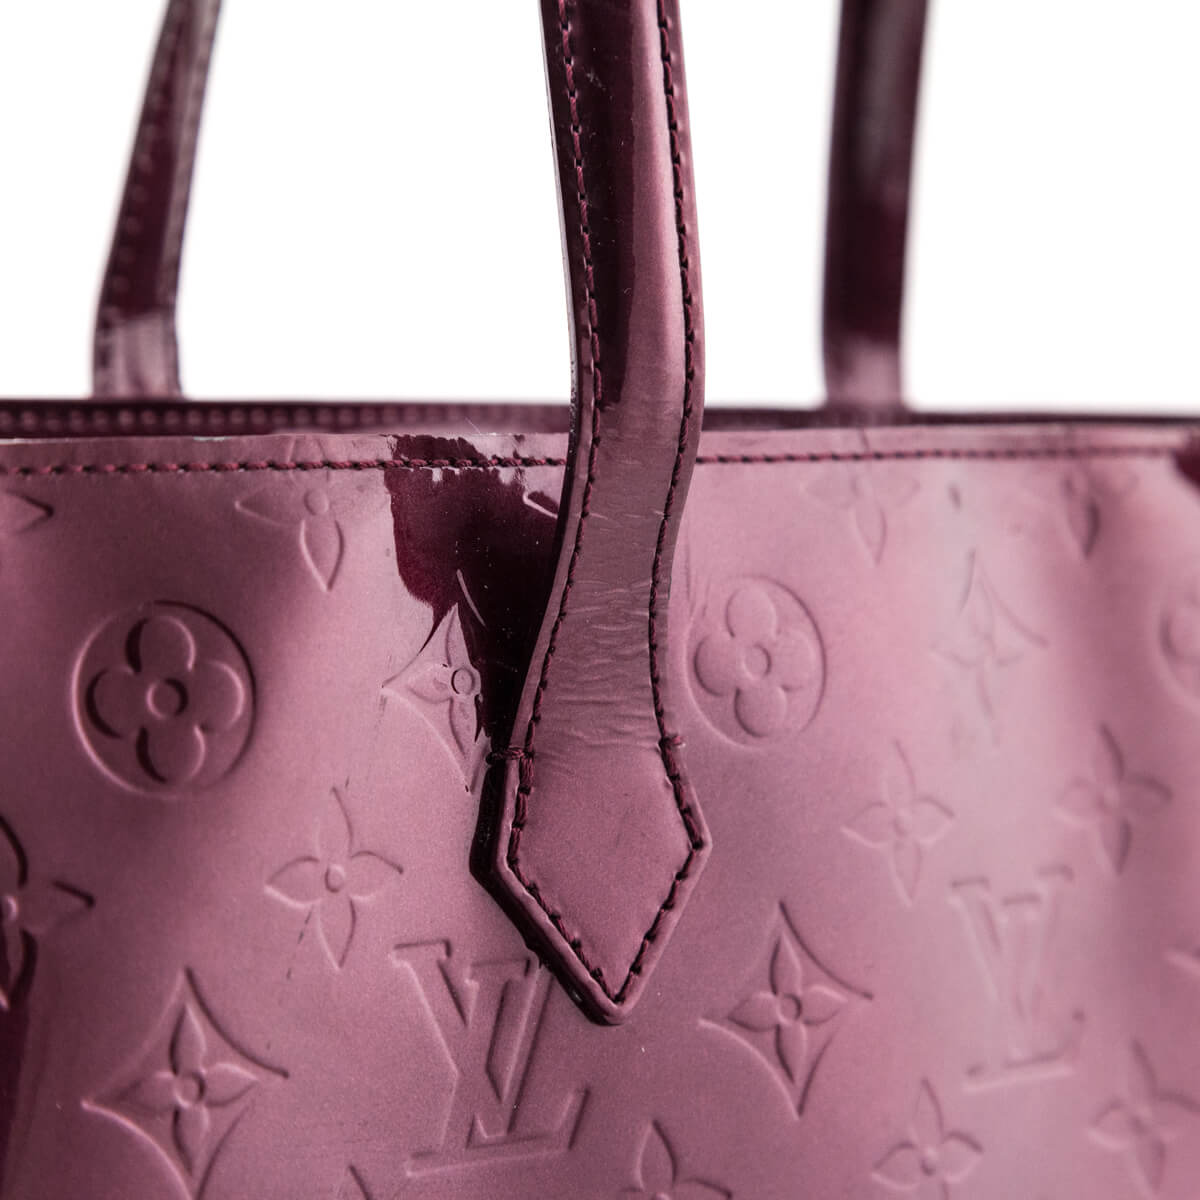 Louis Vuitton Rouge Fauviste Vernis Monogram Wilshire MM - Love that Bag etc - Preowned Authentic Designer Handbags & Preloved Fashions